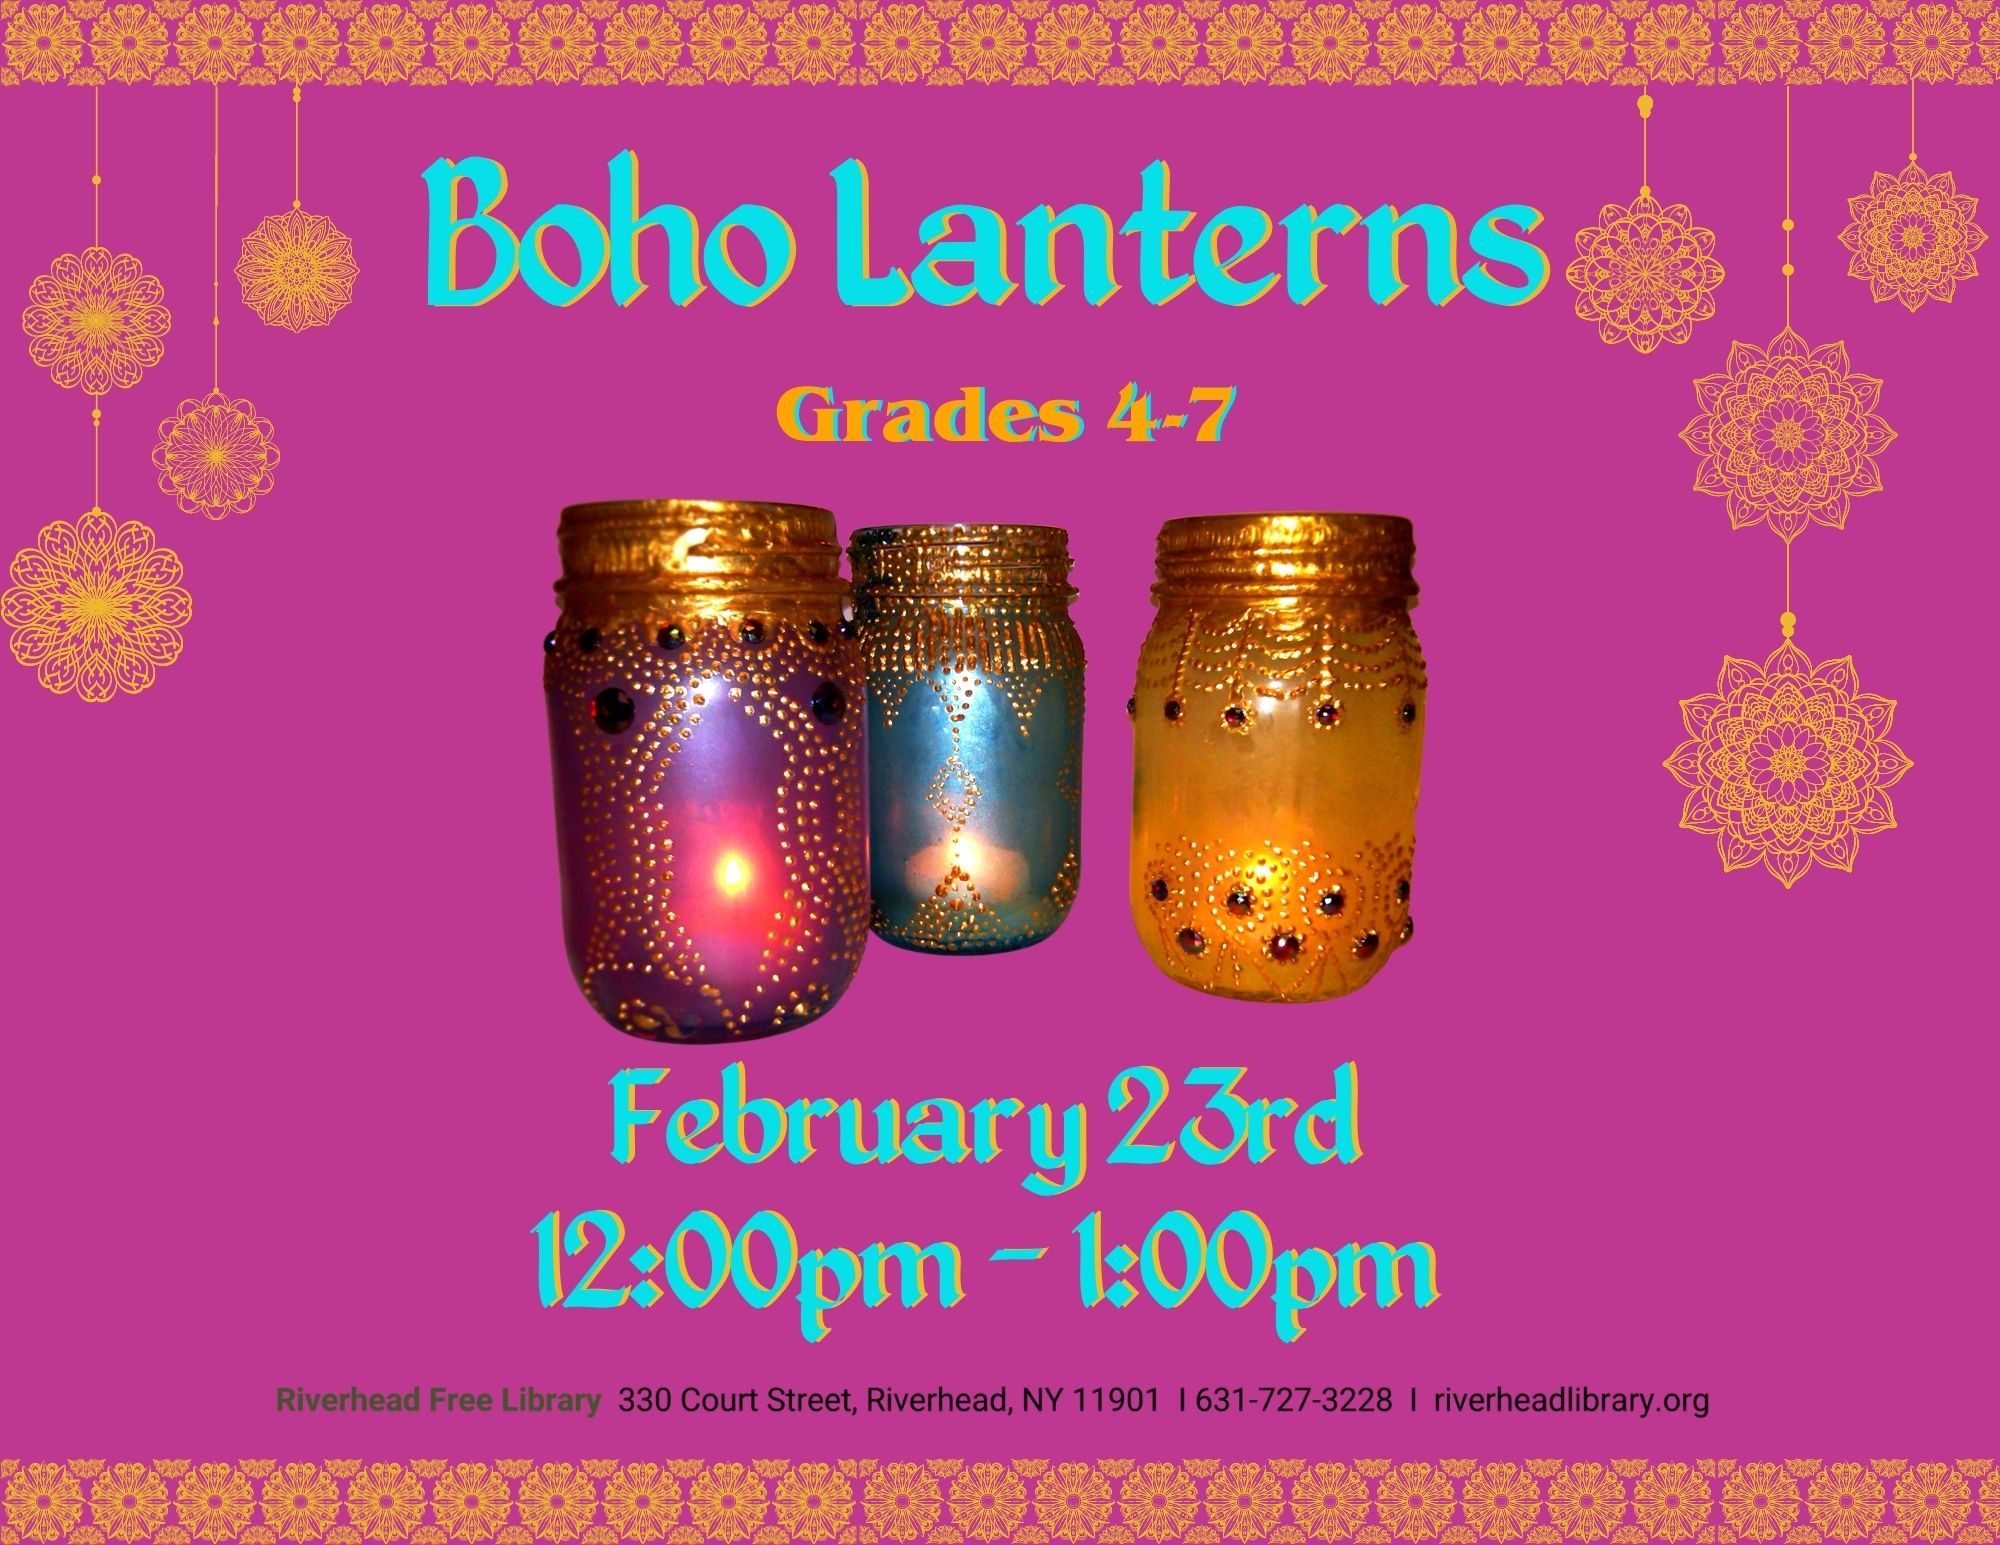 Image of mason jars decorated in a boho style.